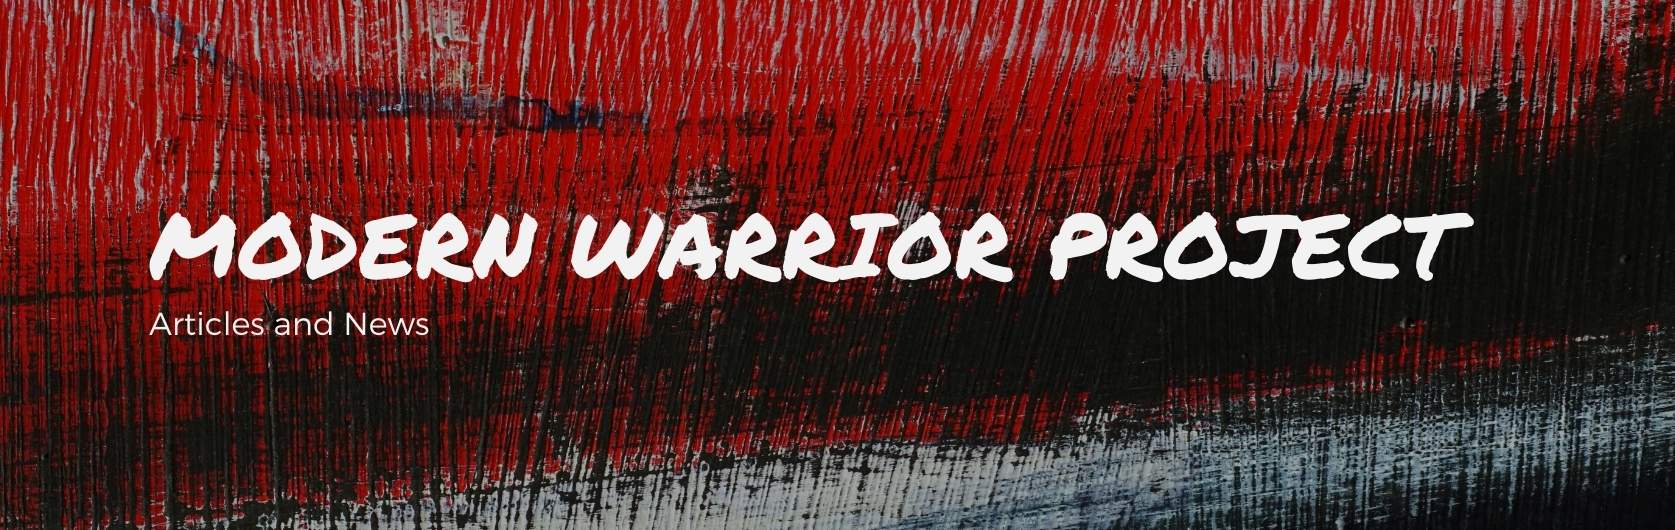 Modern Warrior Project Blog Banner 1675x530